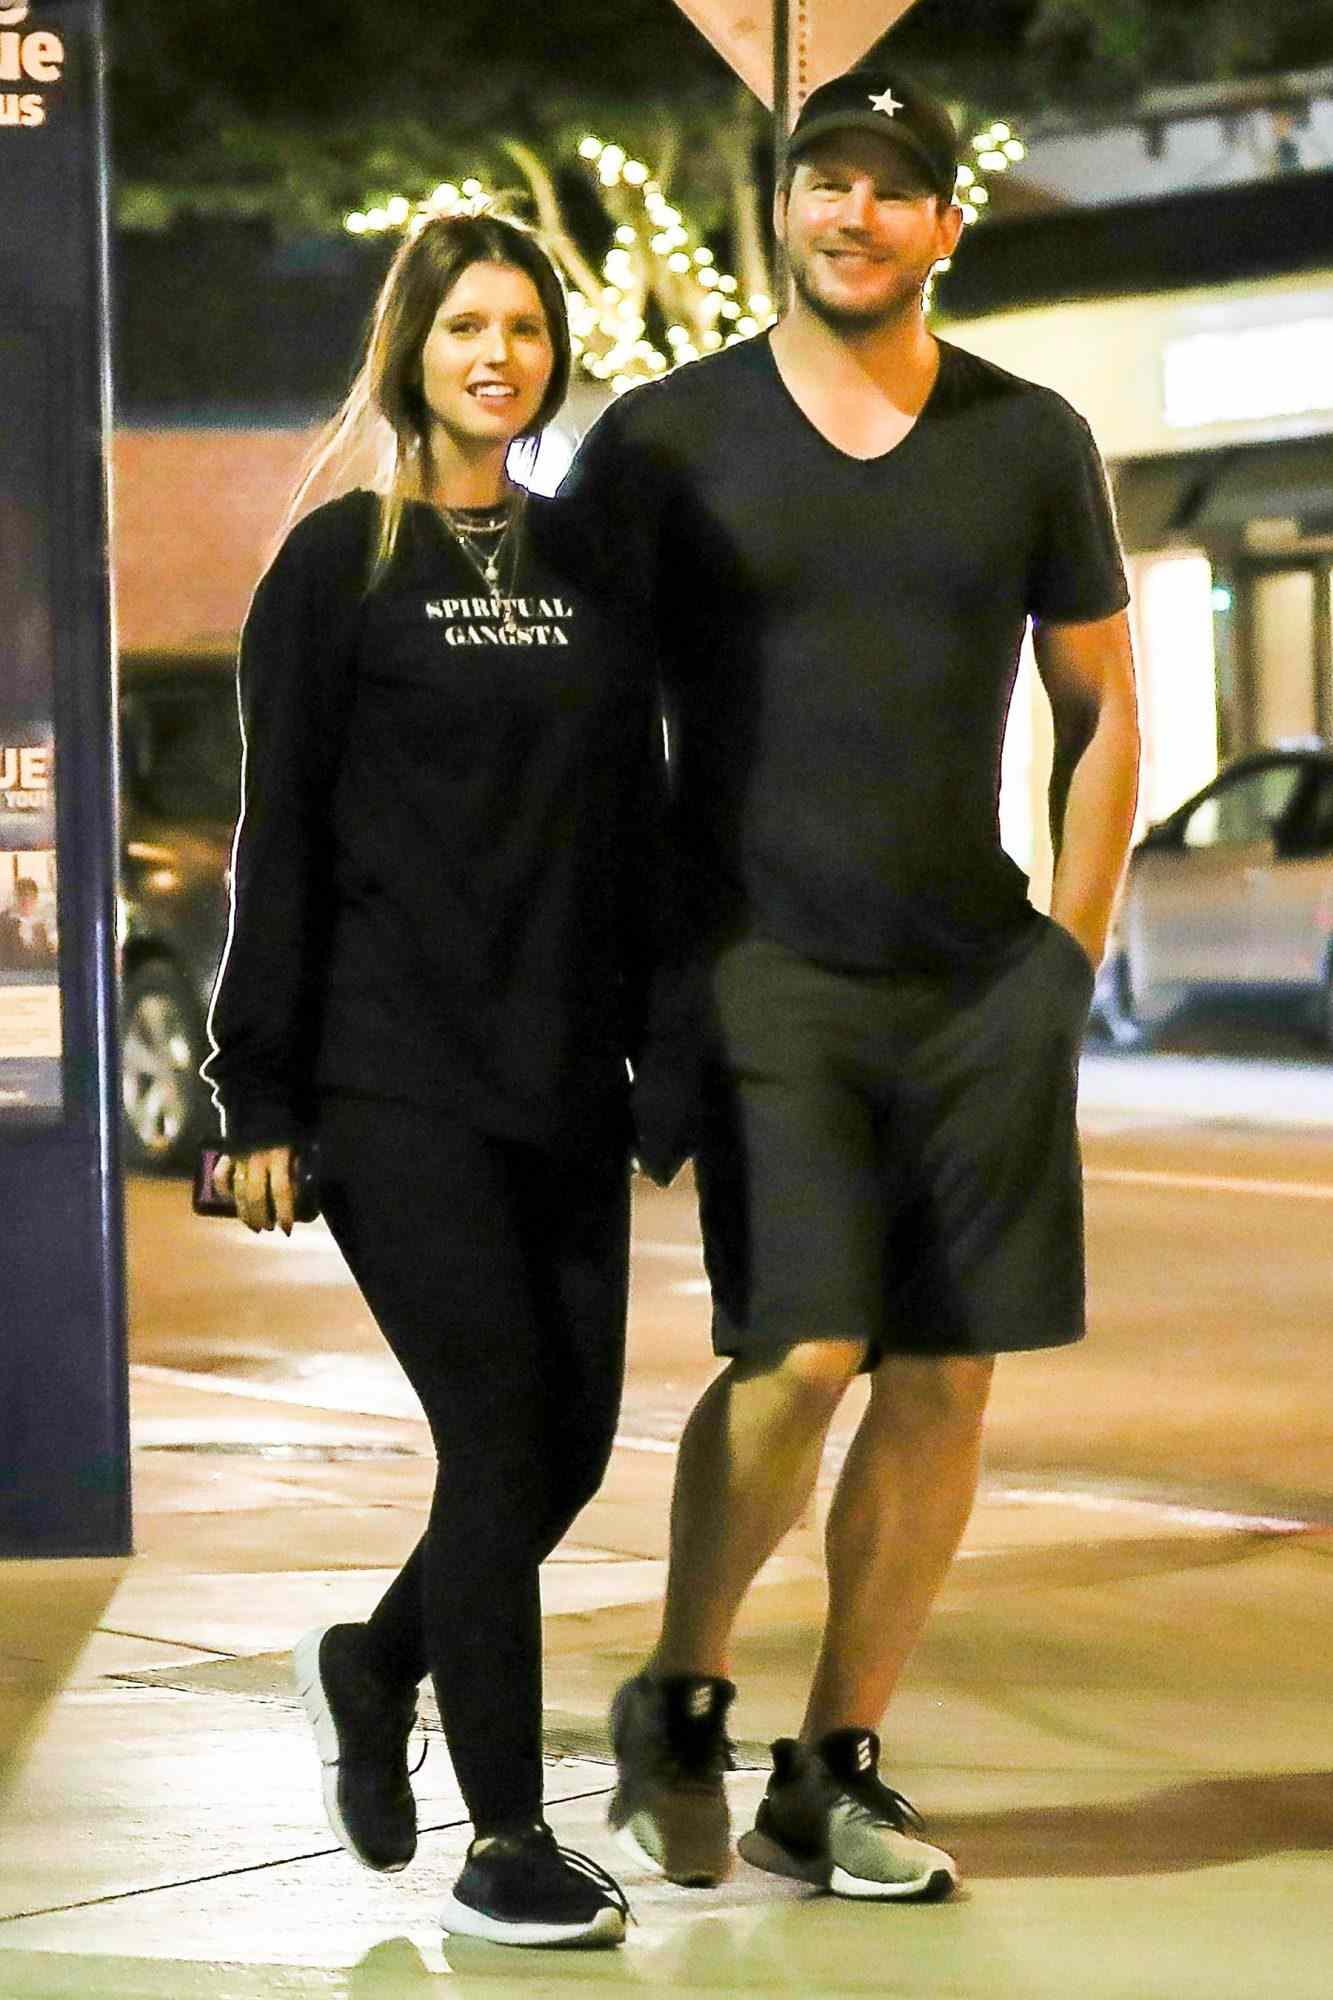 Chris Pratt and Katherine Schwarzenegger are smitten after a date night at R+D Kitchen